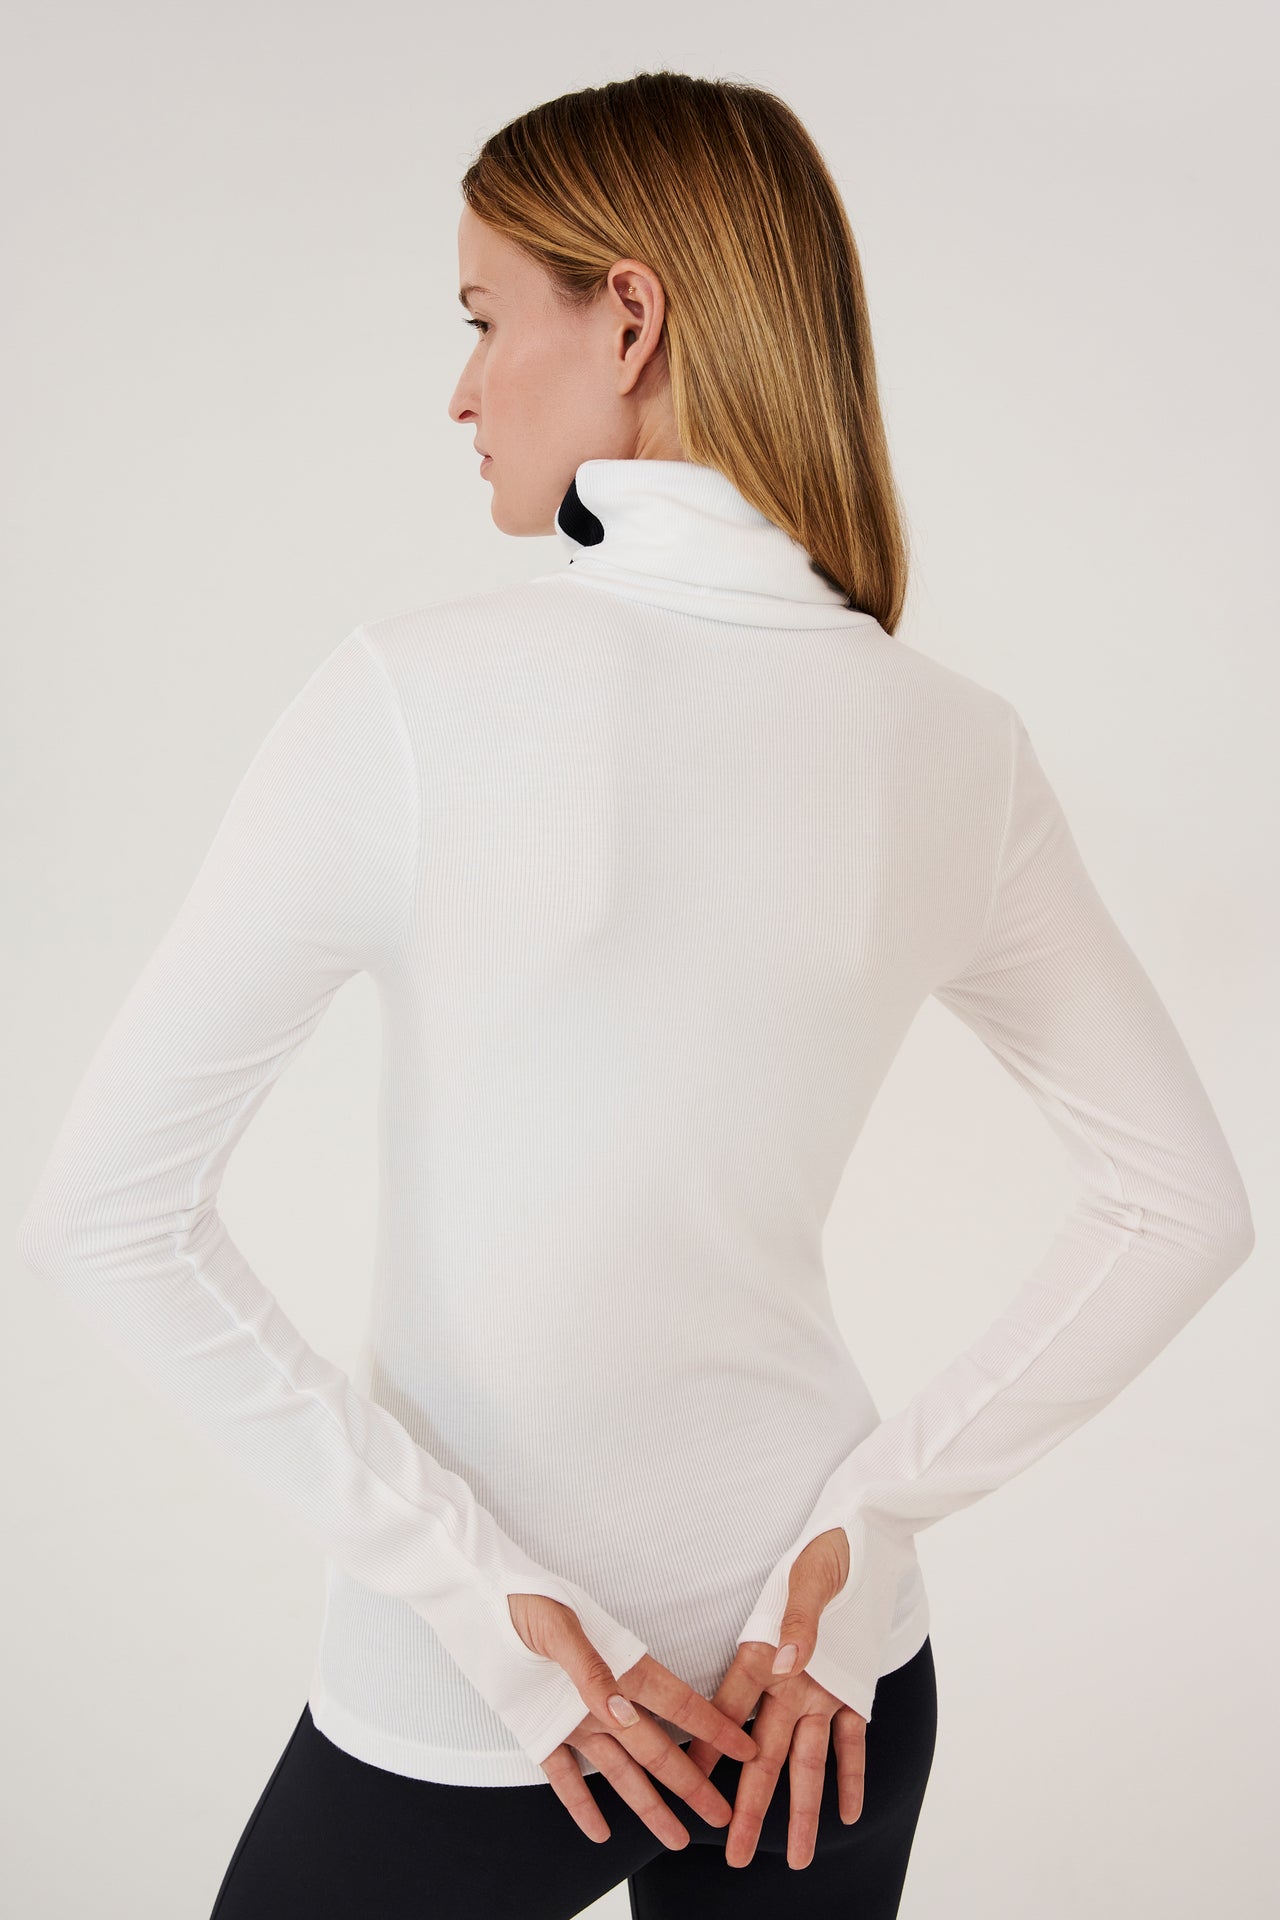 The back view of a woman wearing a SPLITS59 Jackson Rib Full Length Turtleneck - White/Black.